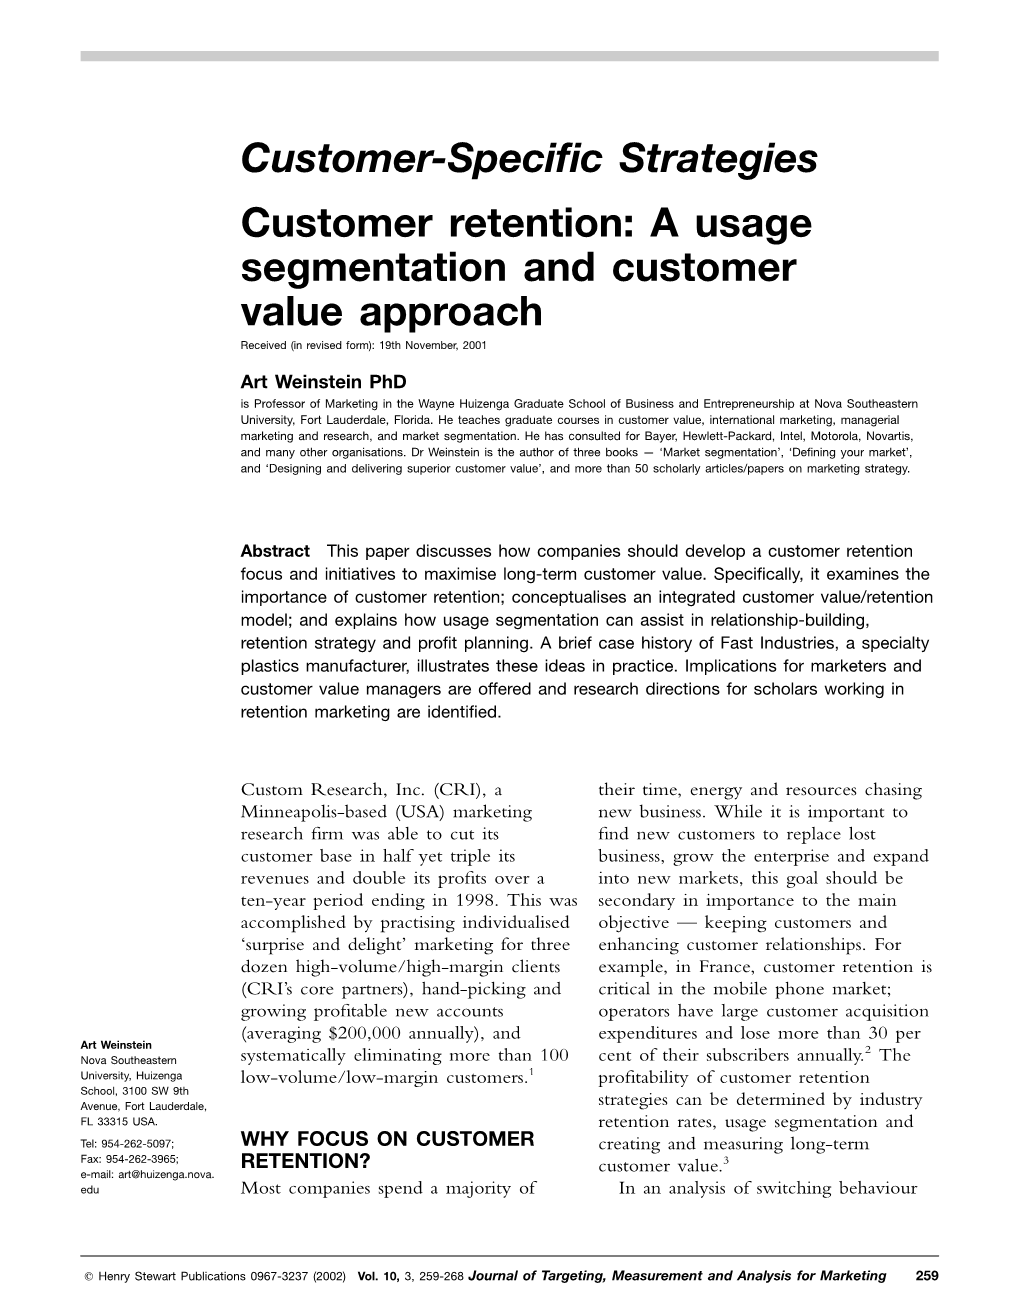 Customer-Specific Strategies Customer Retention: a Usage